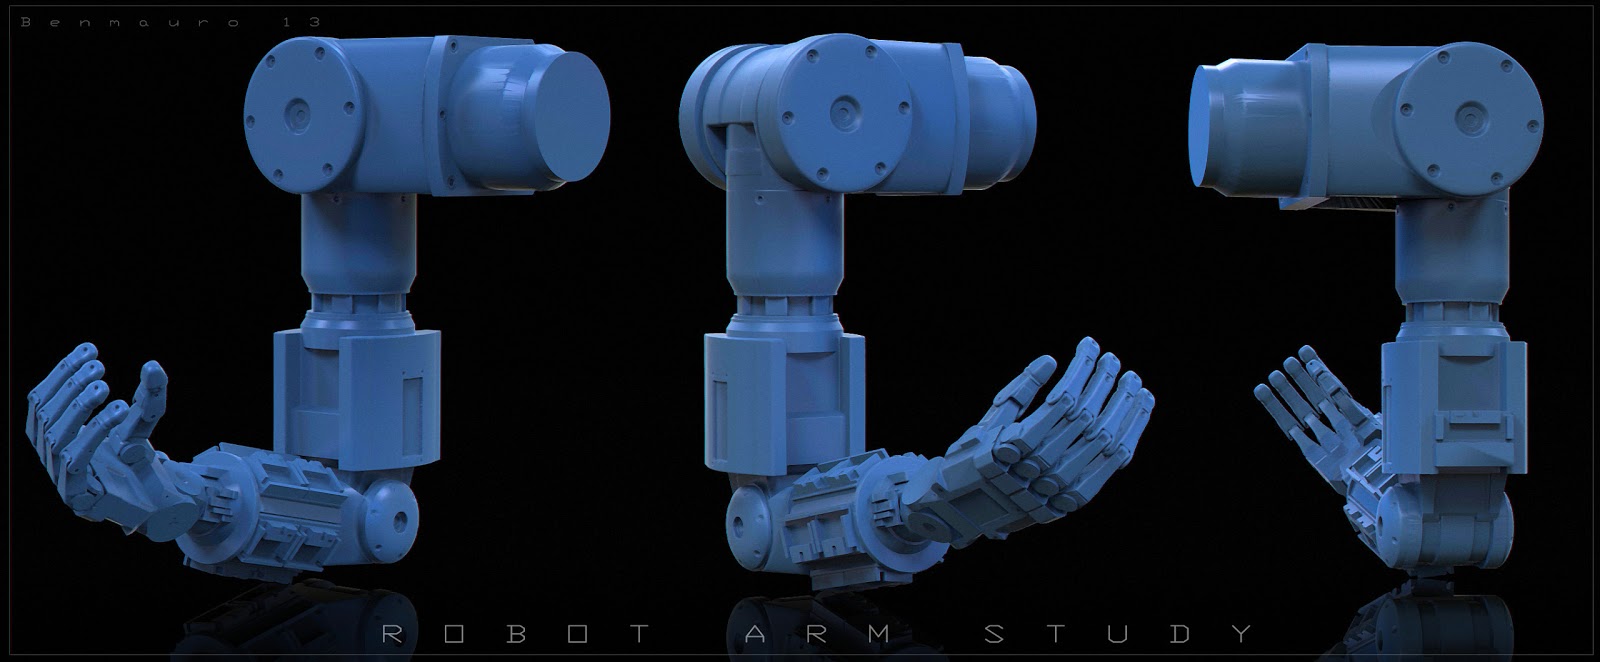 free_robot_arm_by_benmauro-d6jyj2v.jpg